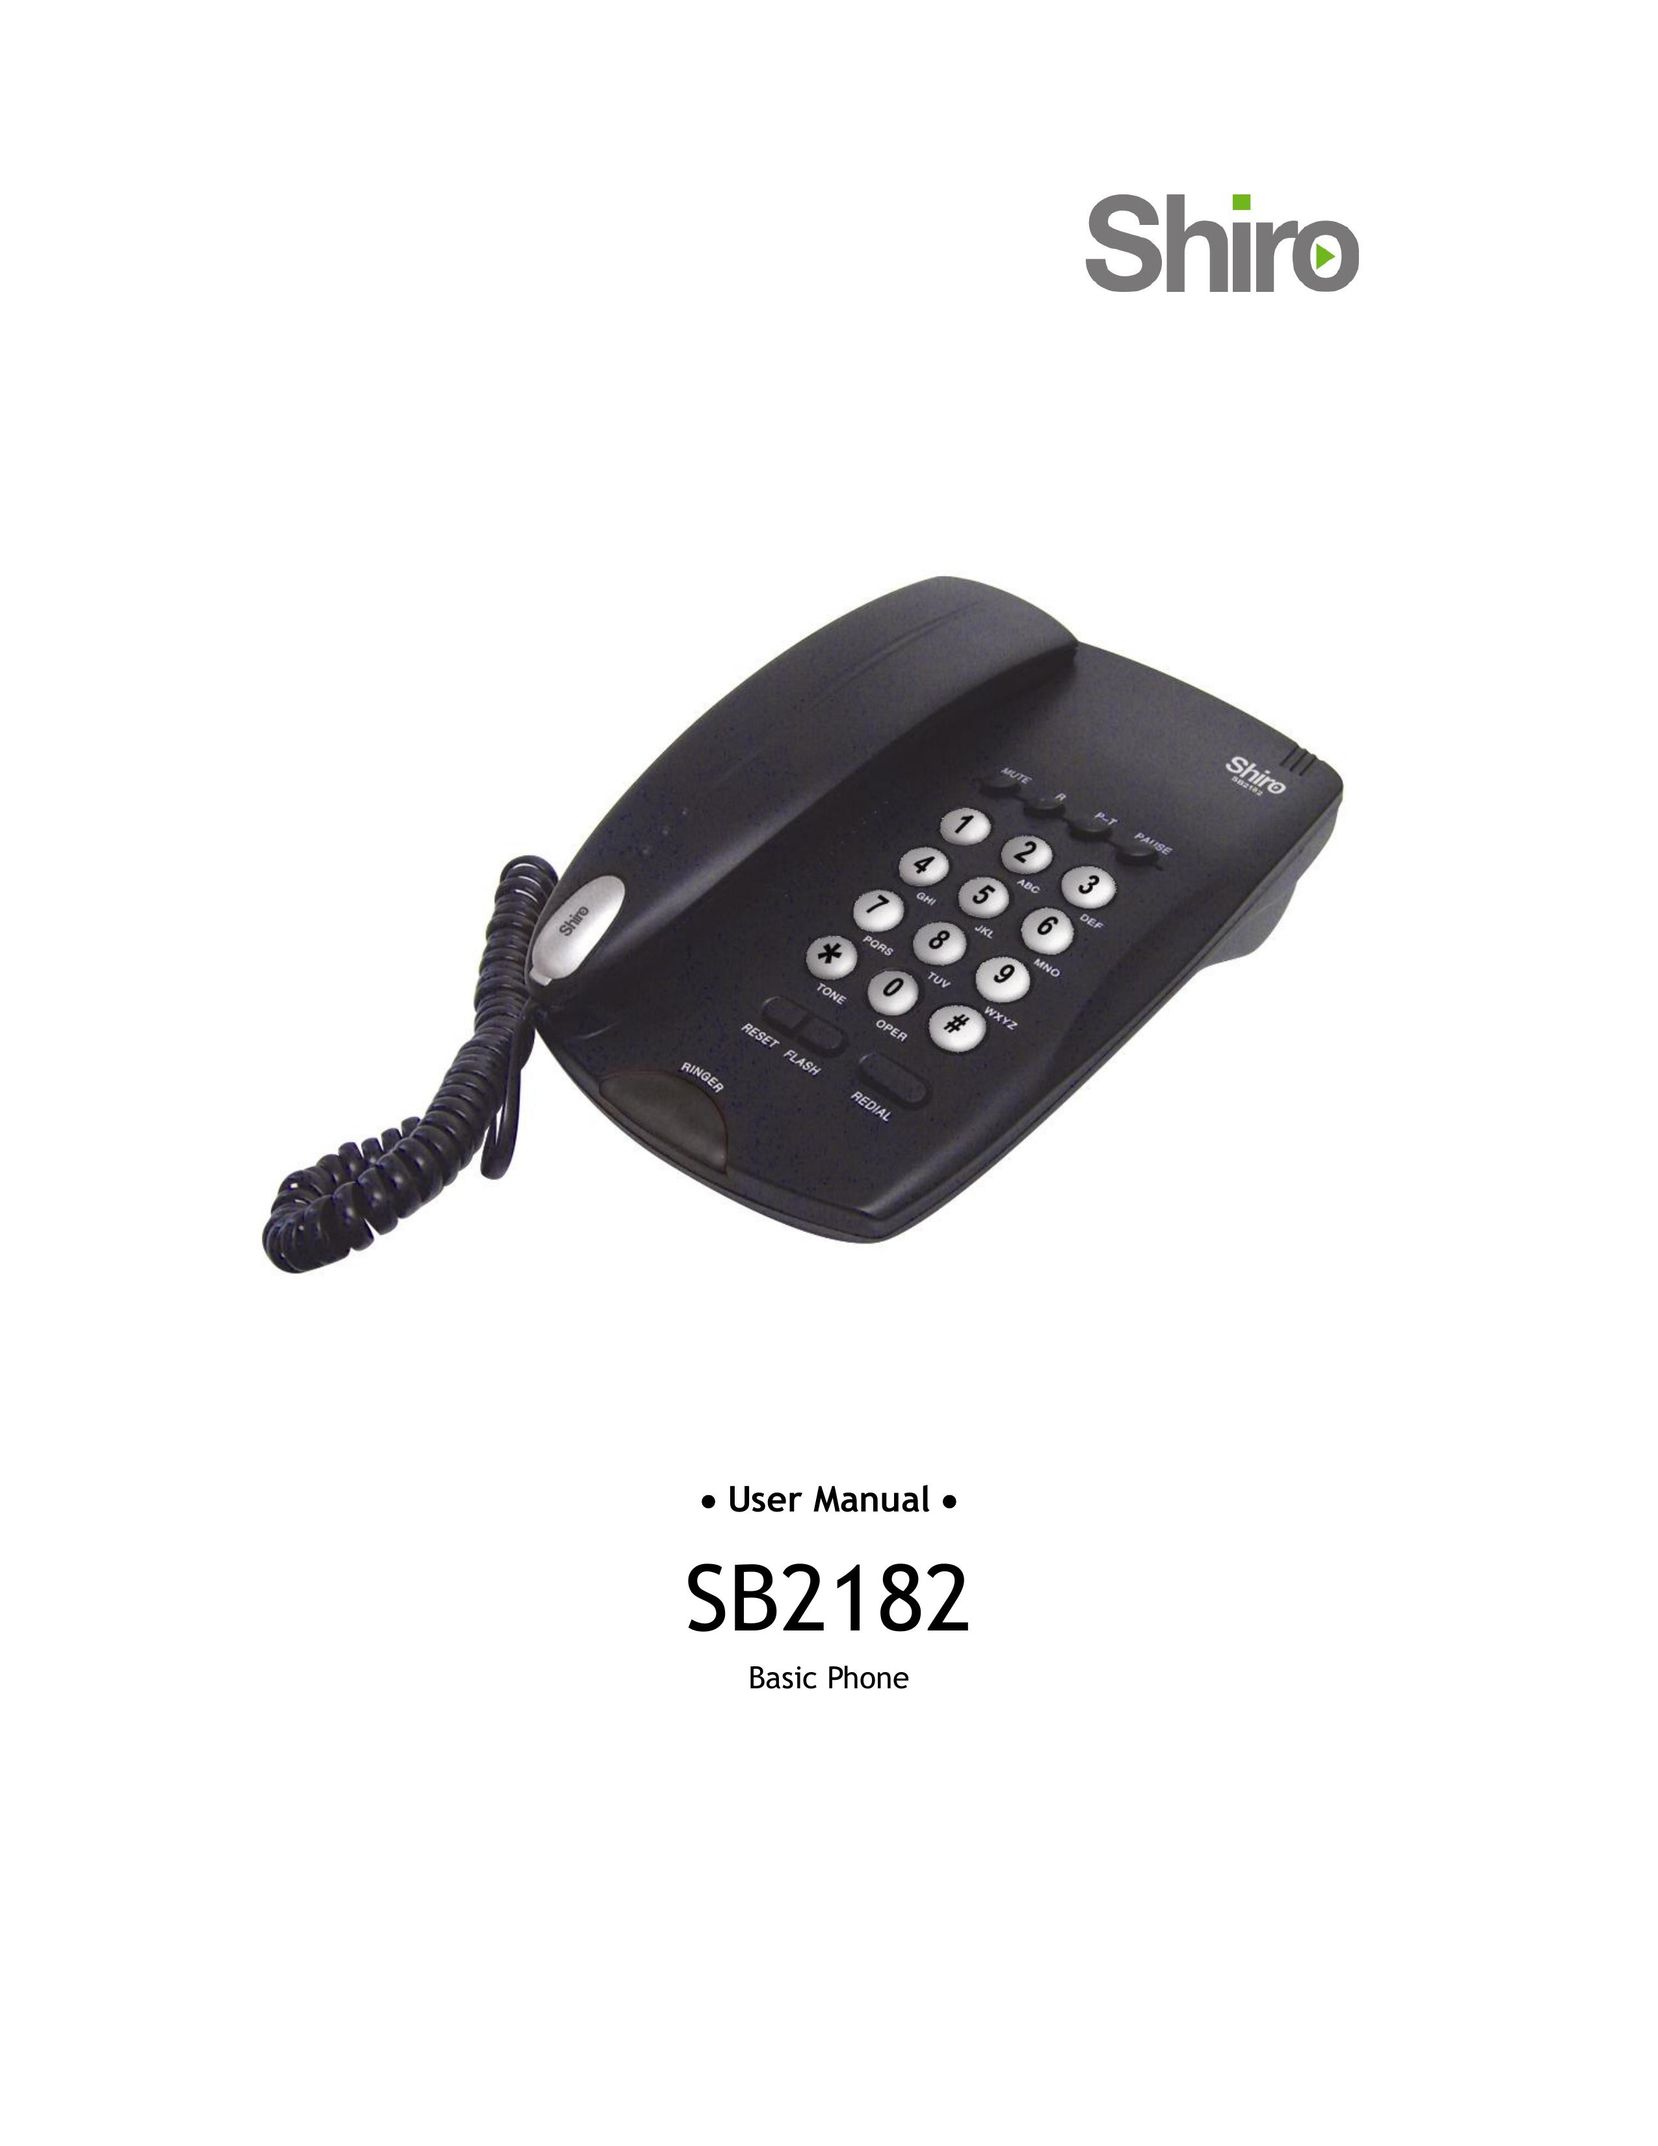 Shiro SB2182 Telephone User Manual